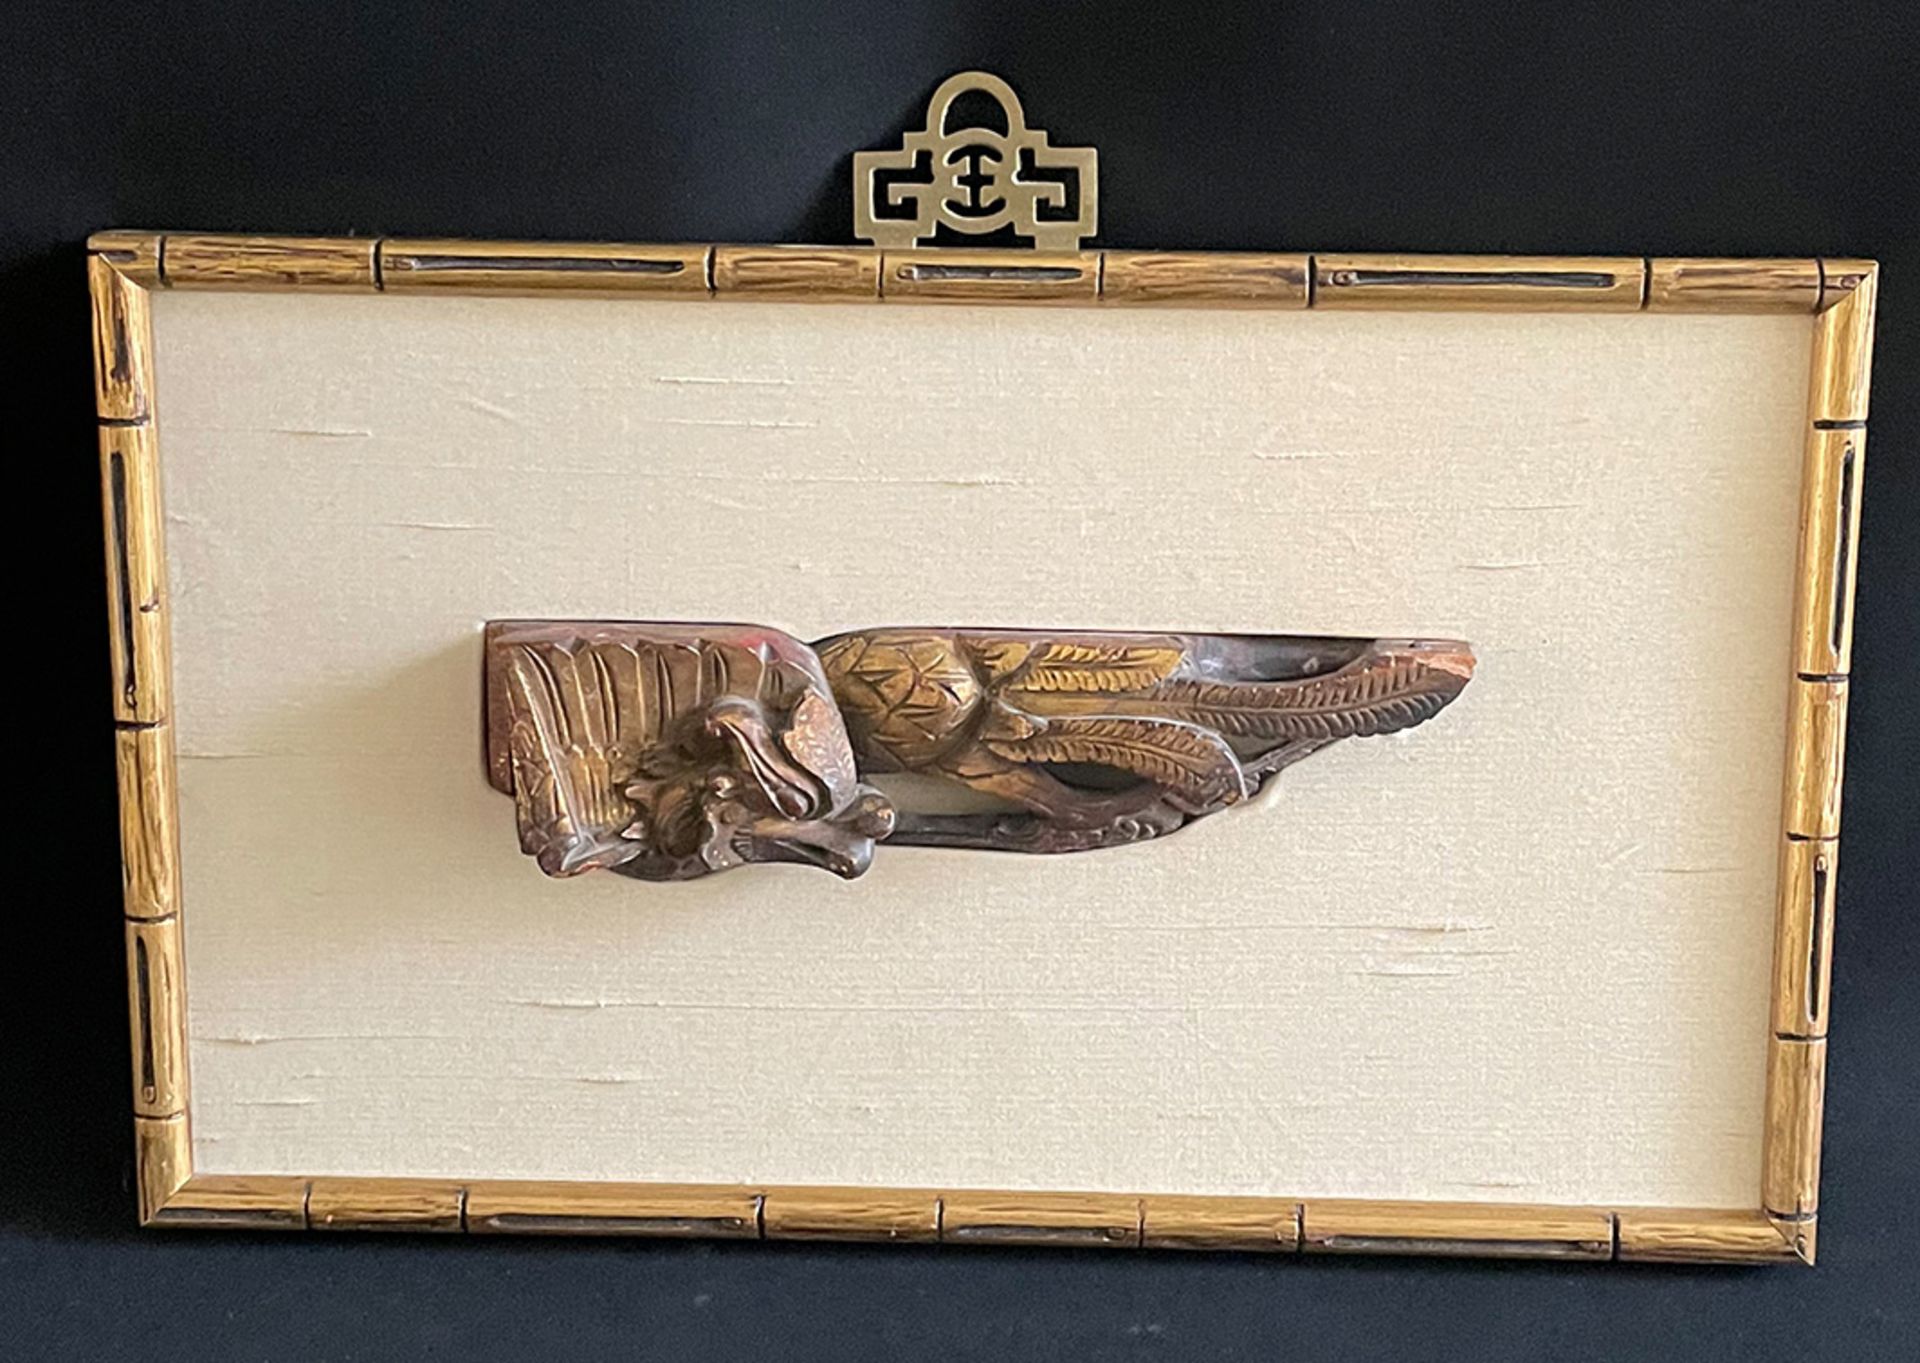 Holzornament aus Tempel, Asien, Alter unbekannt, 6 x 22 x 2,2 cm